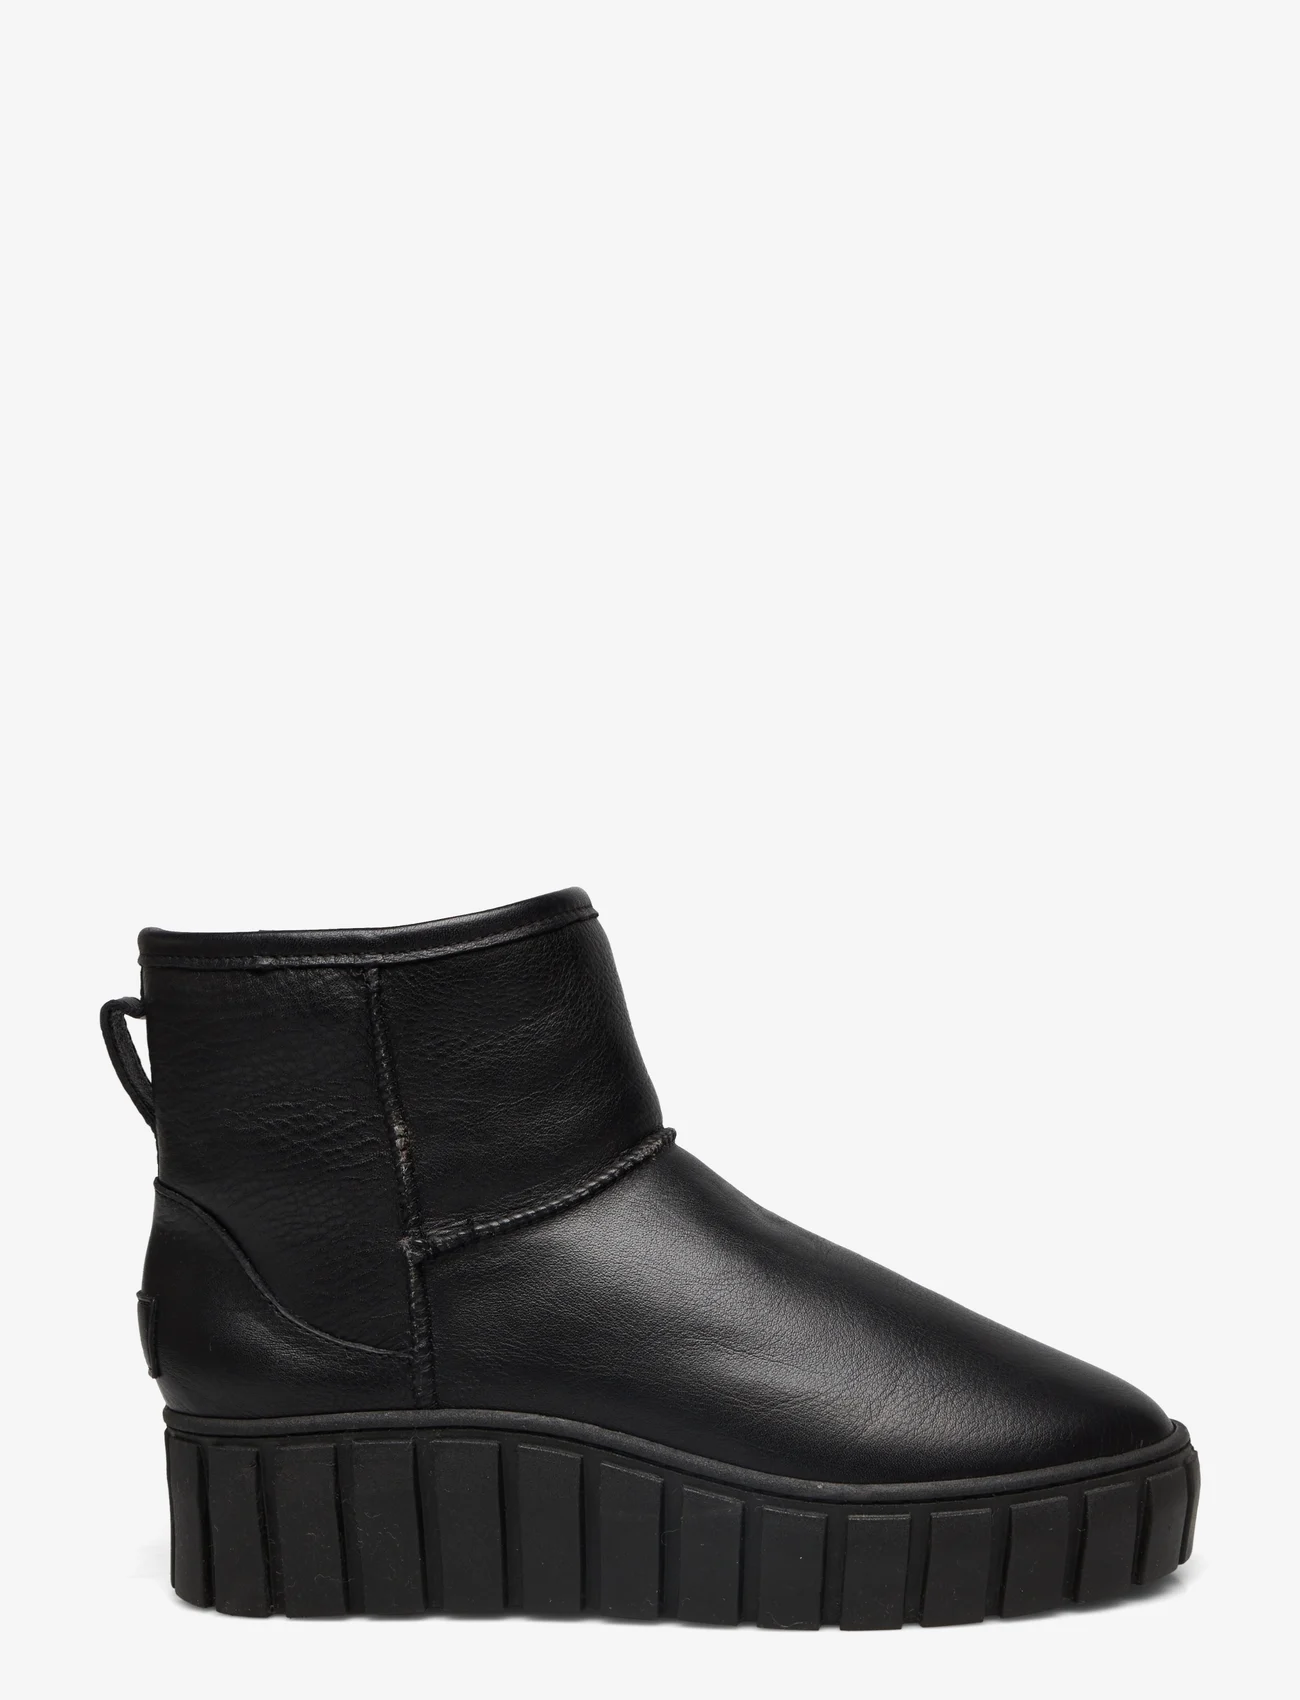 Shepherd - Alexa outdoor - winter shoes - black leather - 1